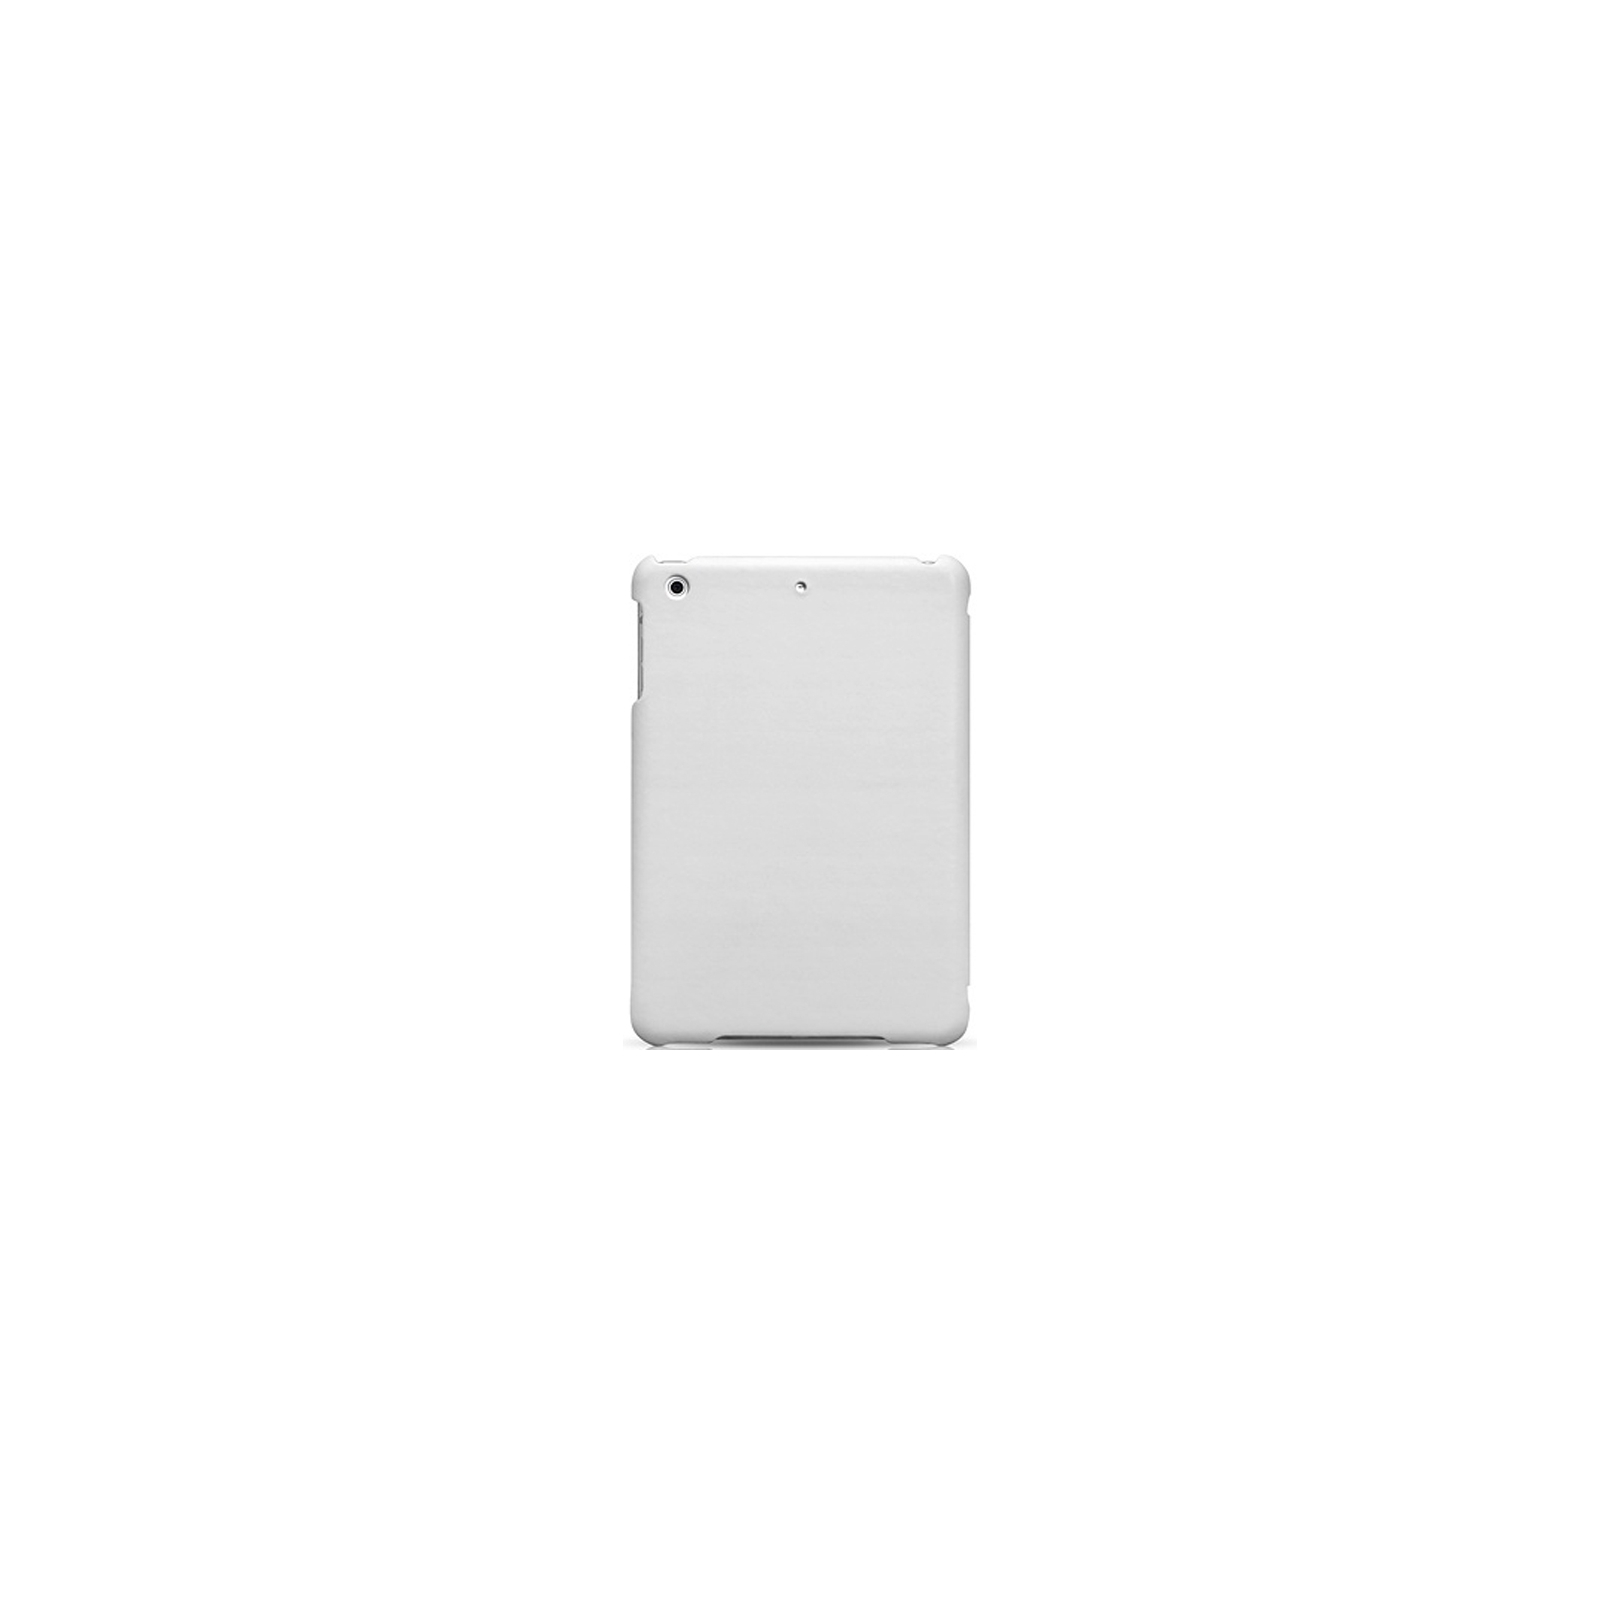 Чехол для планшета i-Carer iPad Mini Retina Ultra thin genuine leather series white (RID794wh) изображение 2